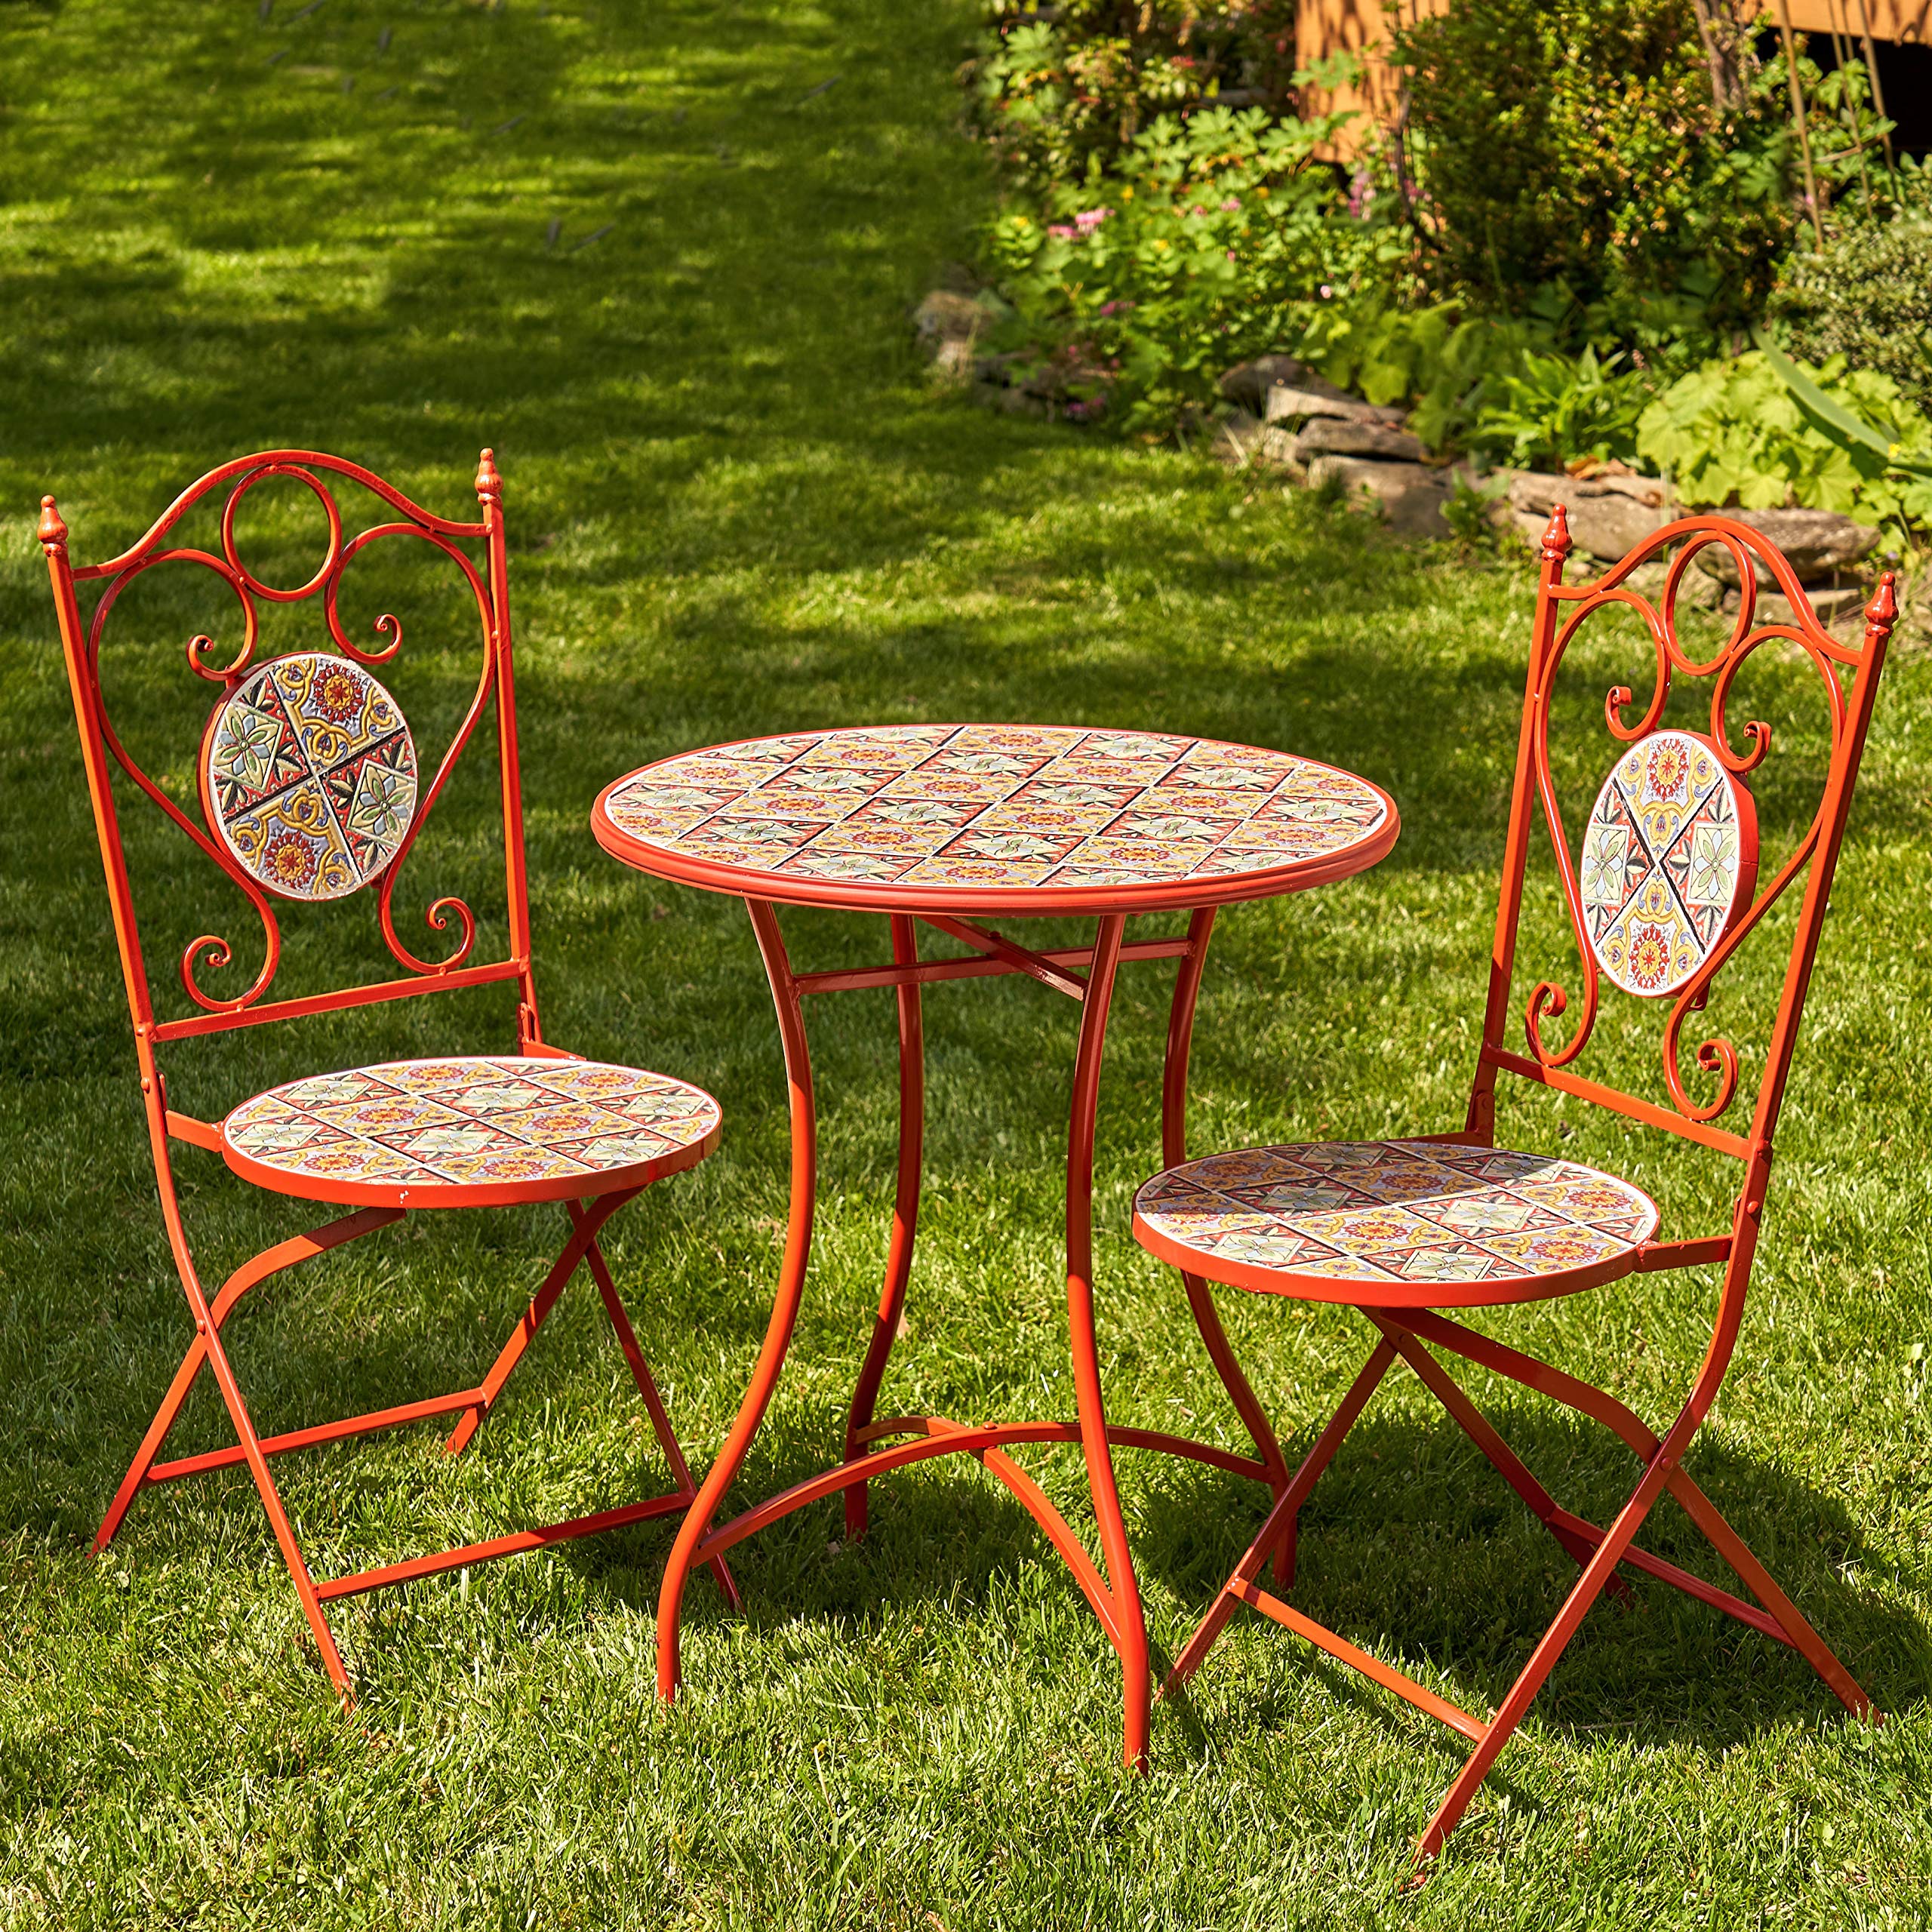 Zaer Ltd. Mosaic Tile Furniture (Bistro Set (1 Table, 2 Chairs), Tokyo Red)